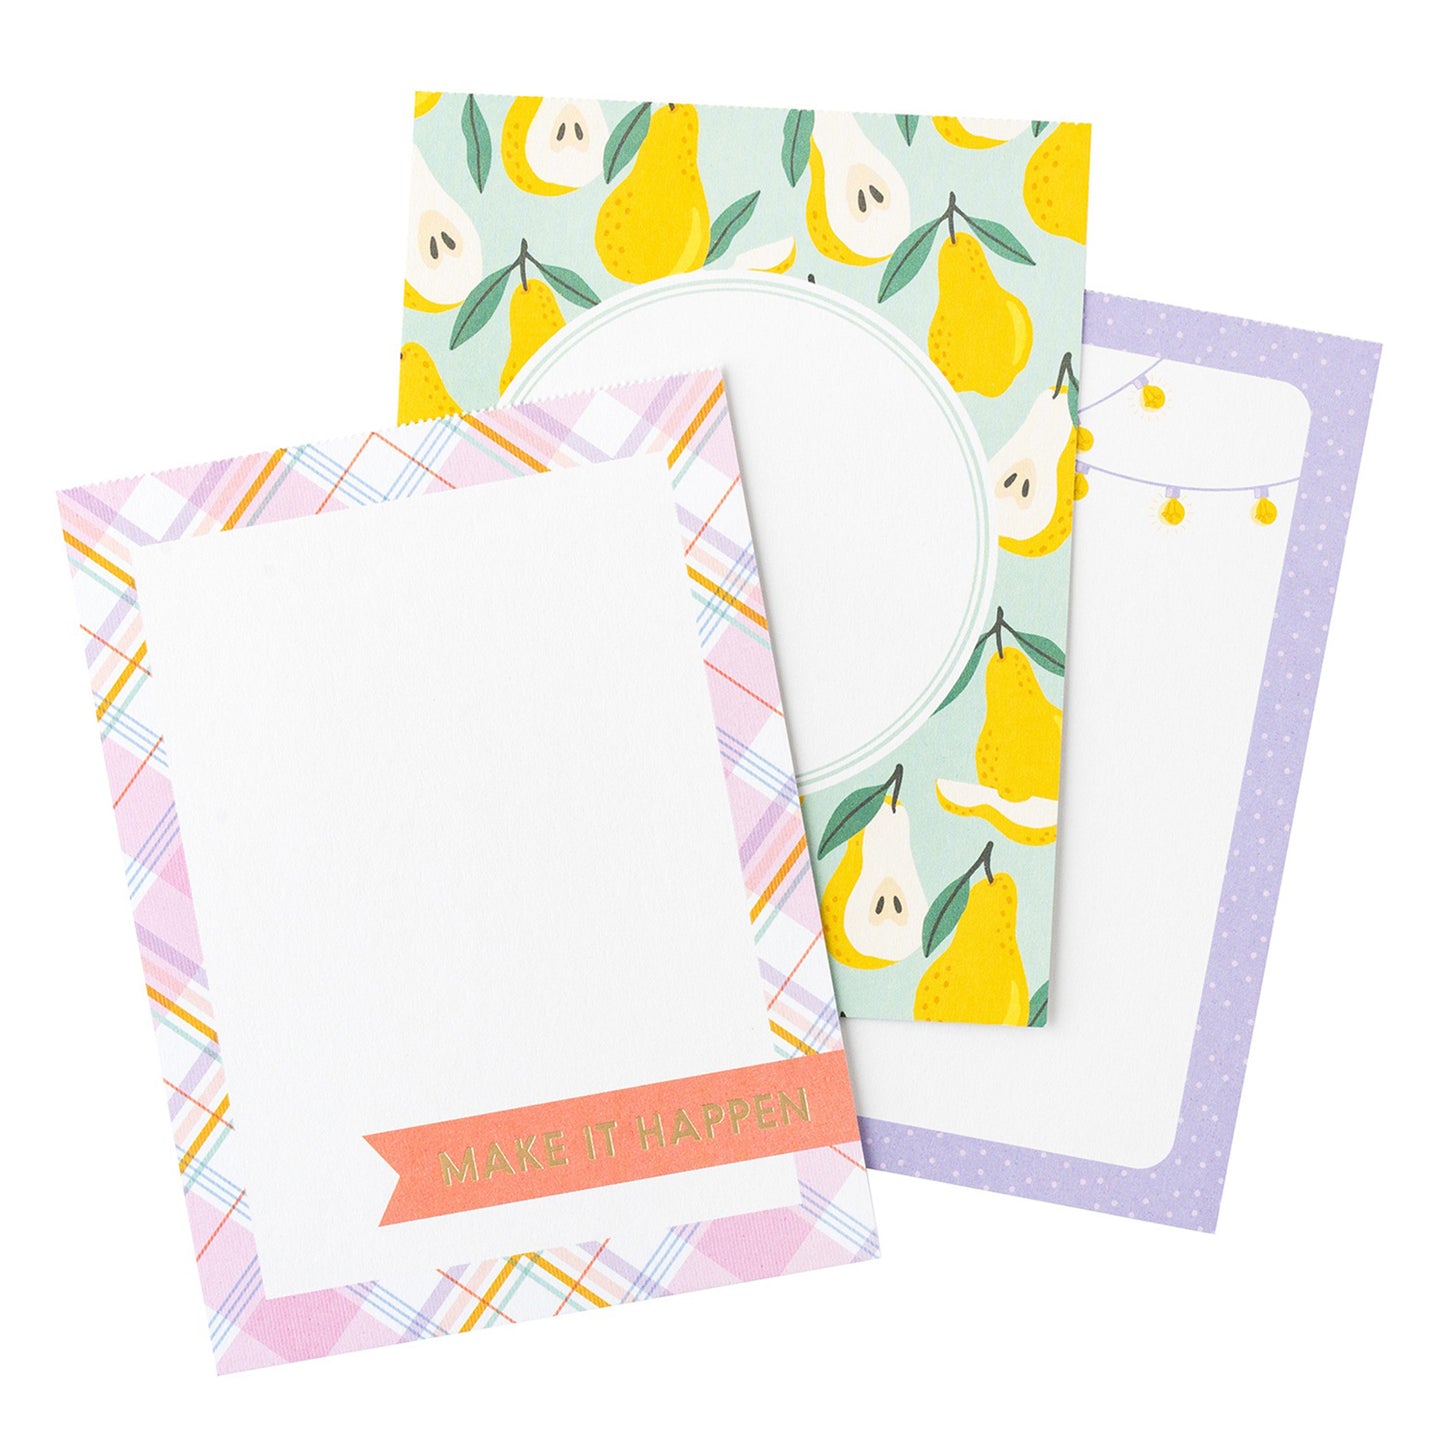 Bea Valint - 3 x 4 Journaling Cards - Poppy & Pear